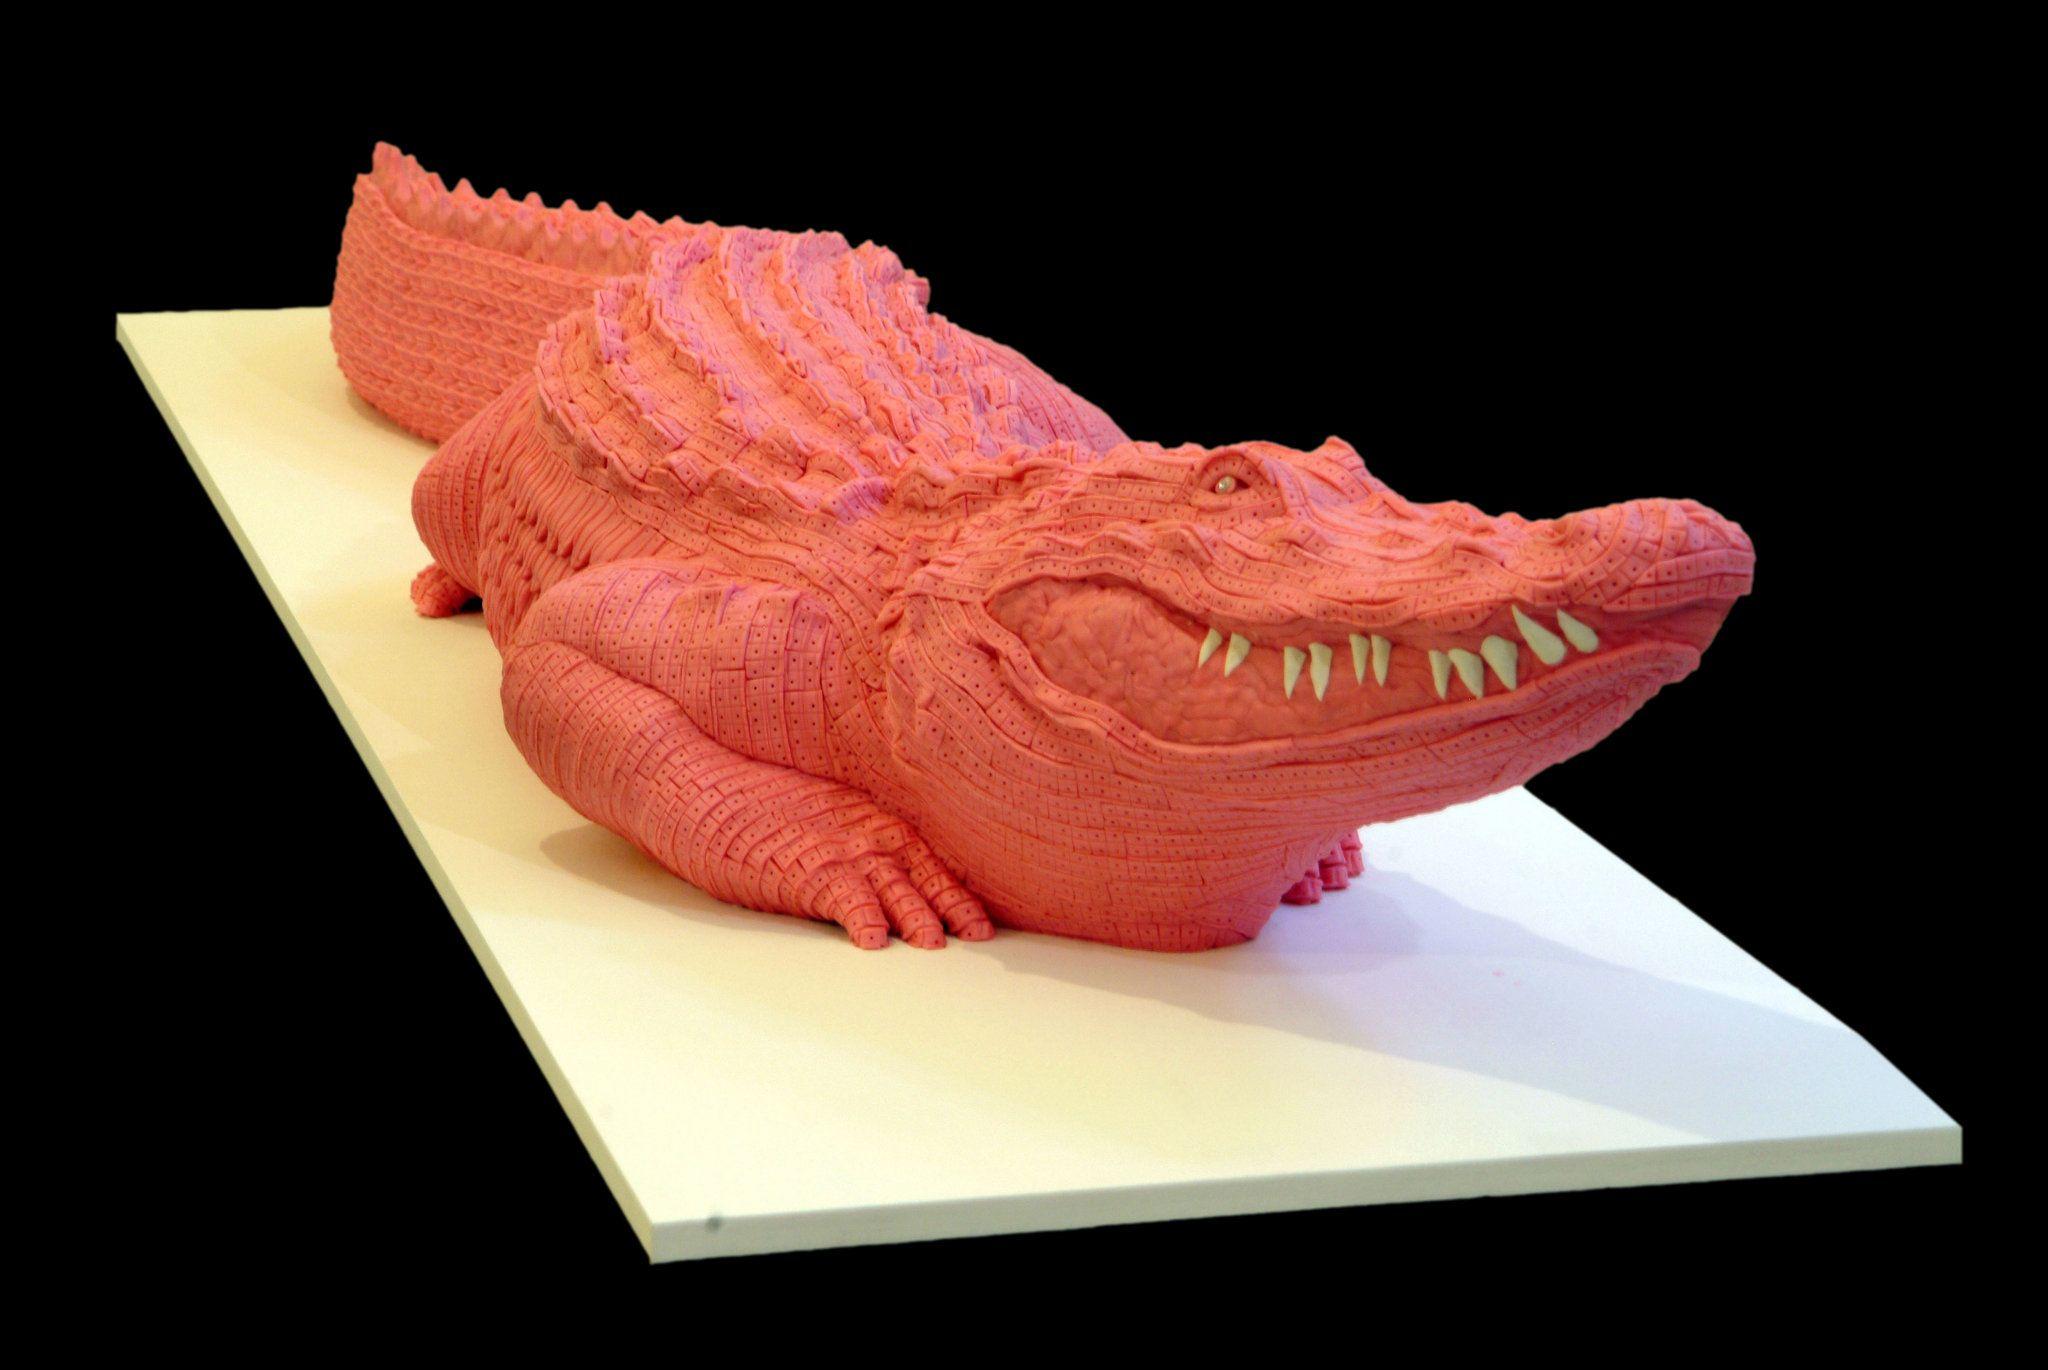 Pink Crocodile Logo - Want to see a pink crocodile? Go to the Philadelphia Zoo